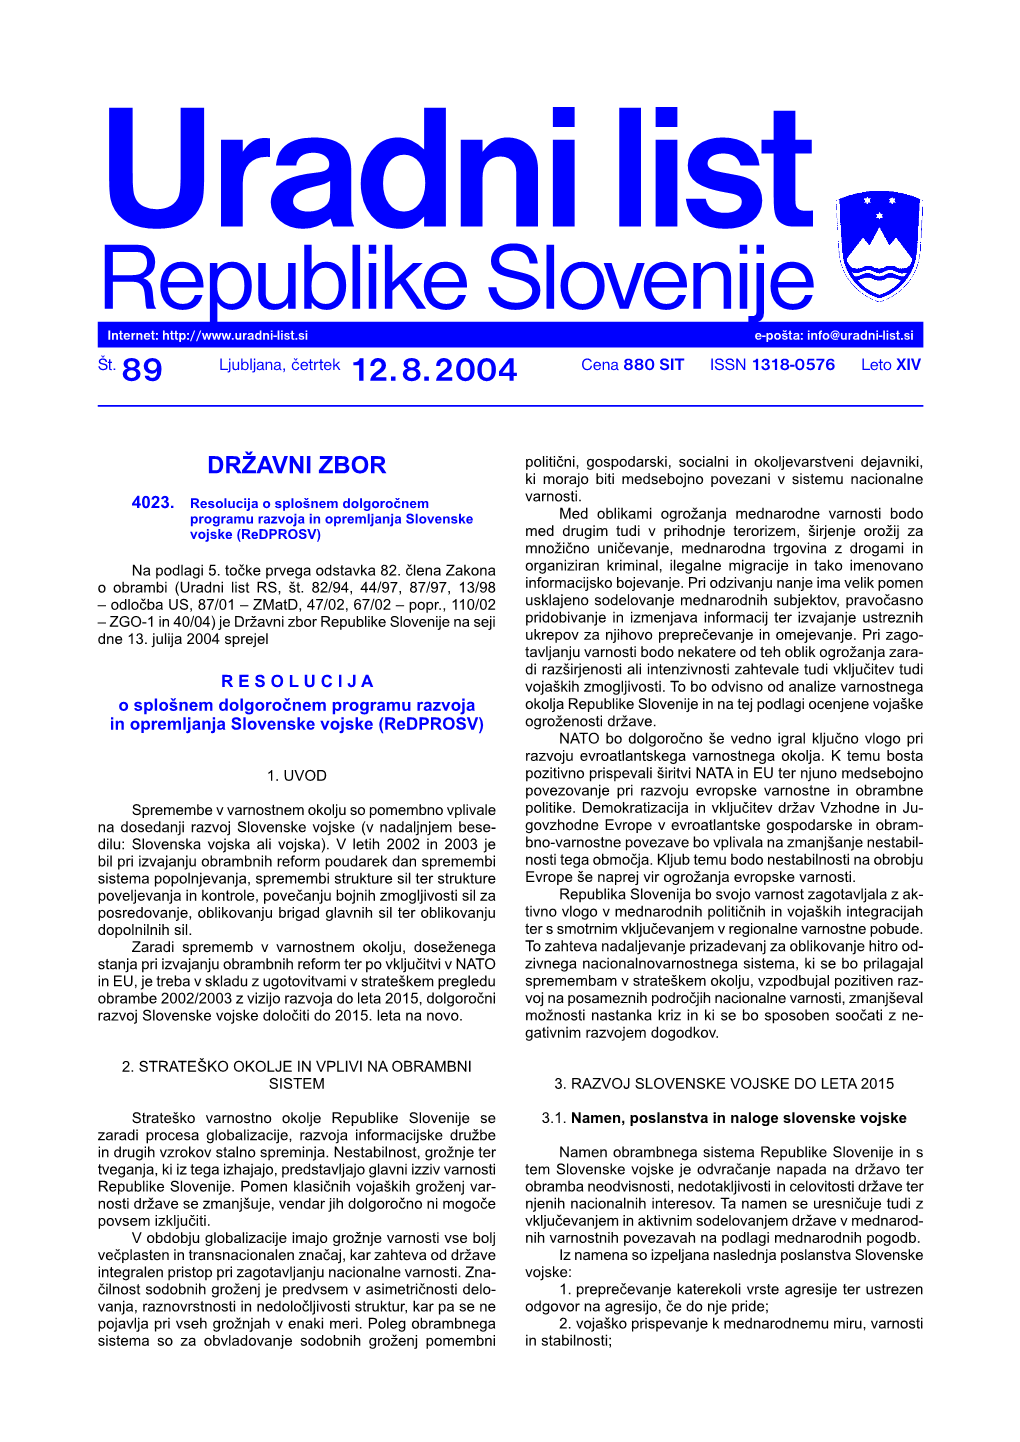 Uradni List RS – 89/2004, Uredbeni